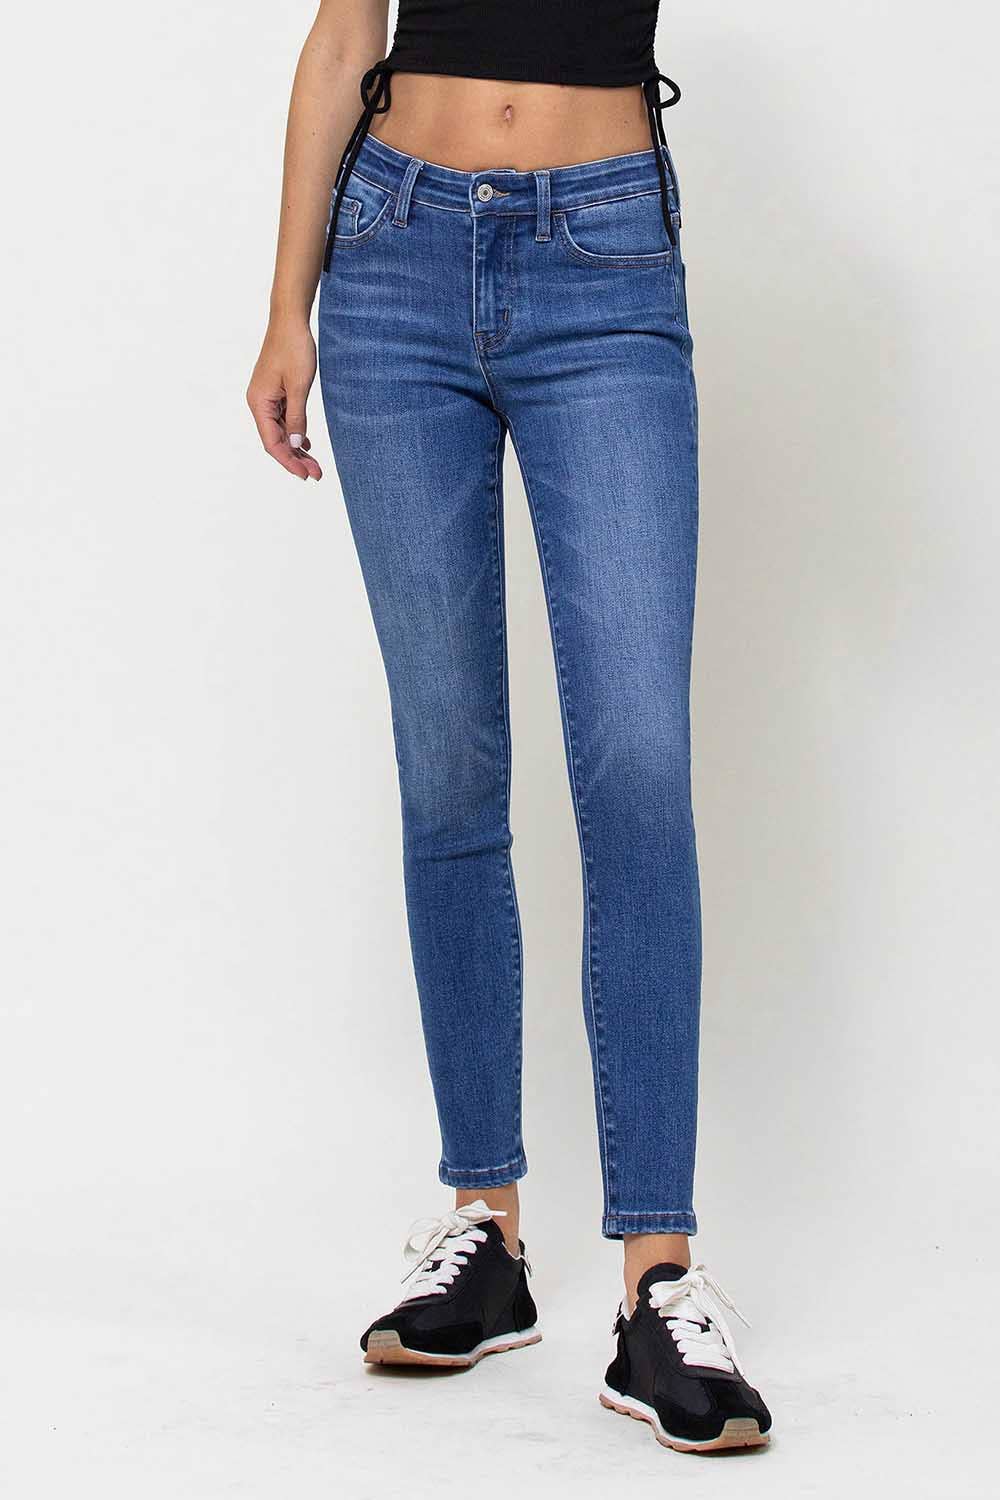 Haylie High Rise Skinny Jeans - Vervet